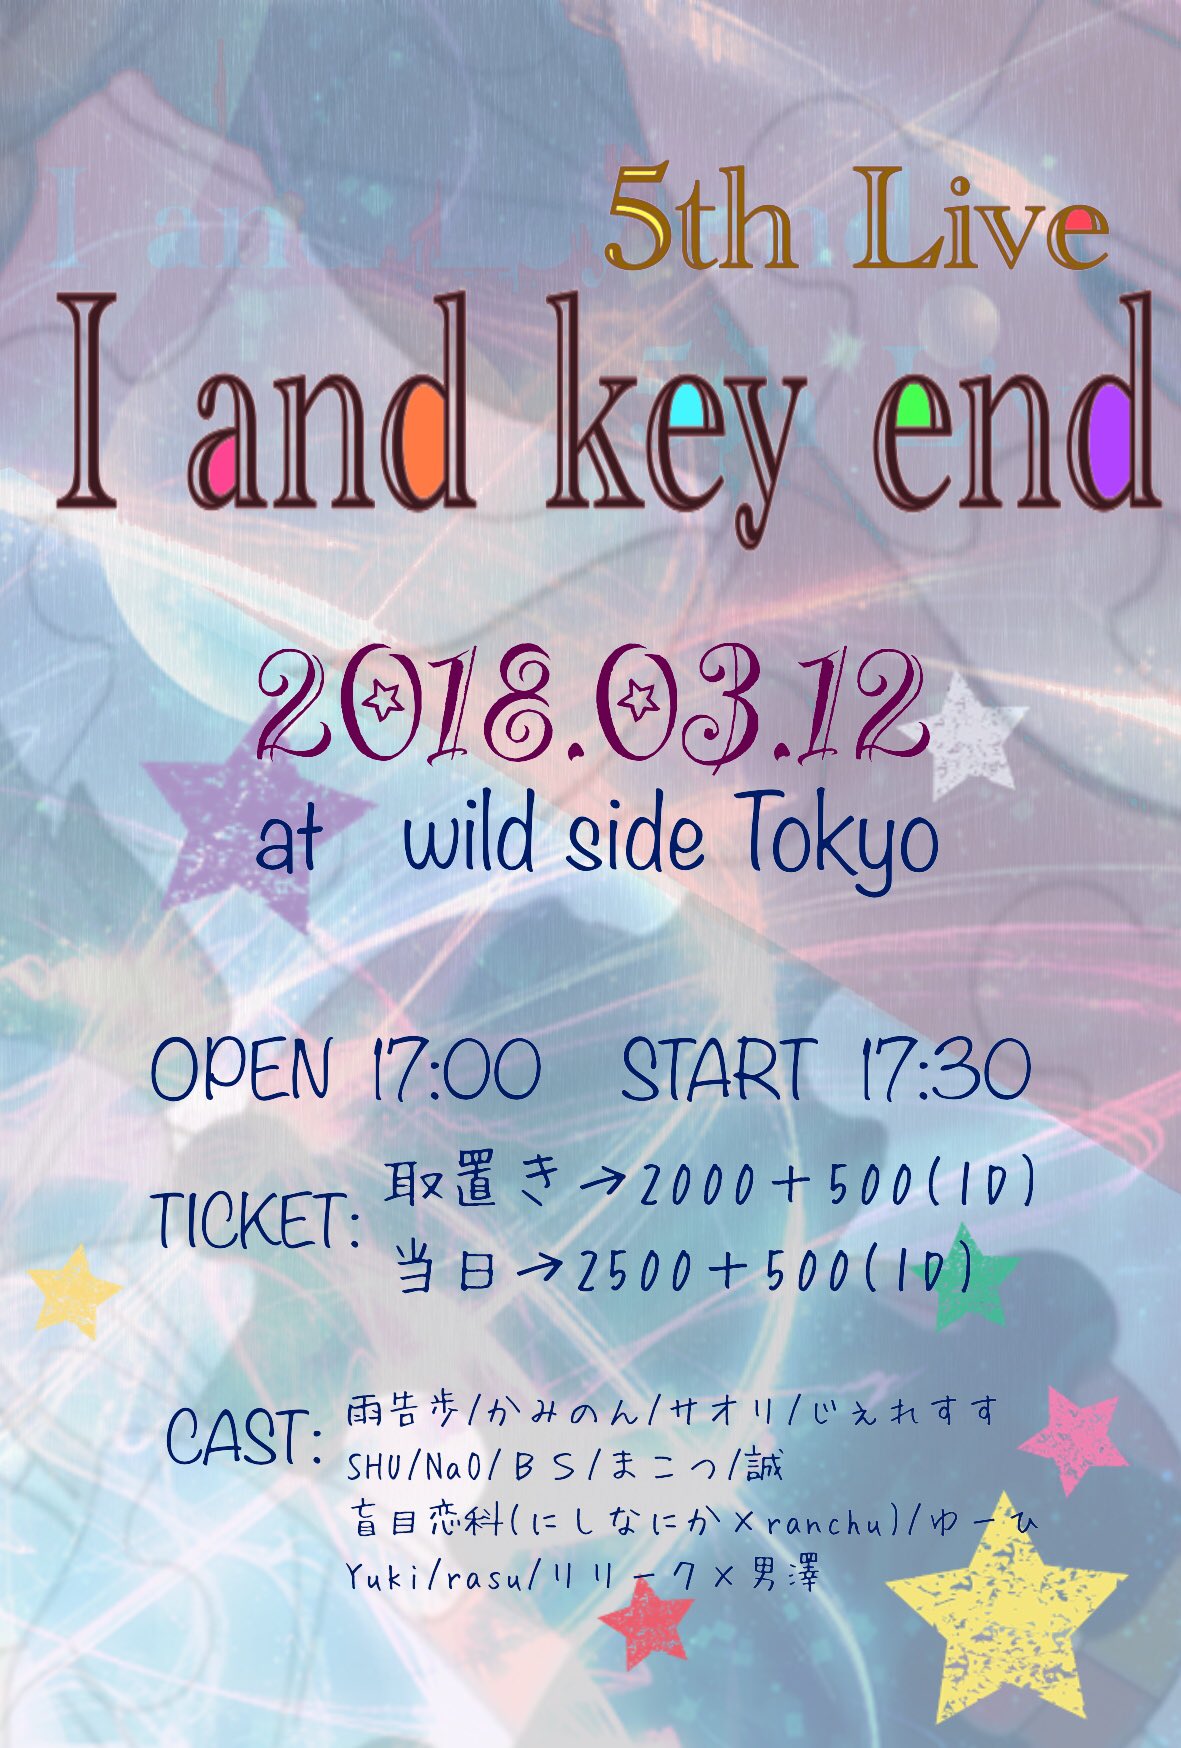 I_and_key_end_5th.jpg